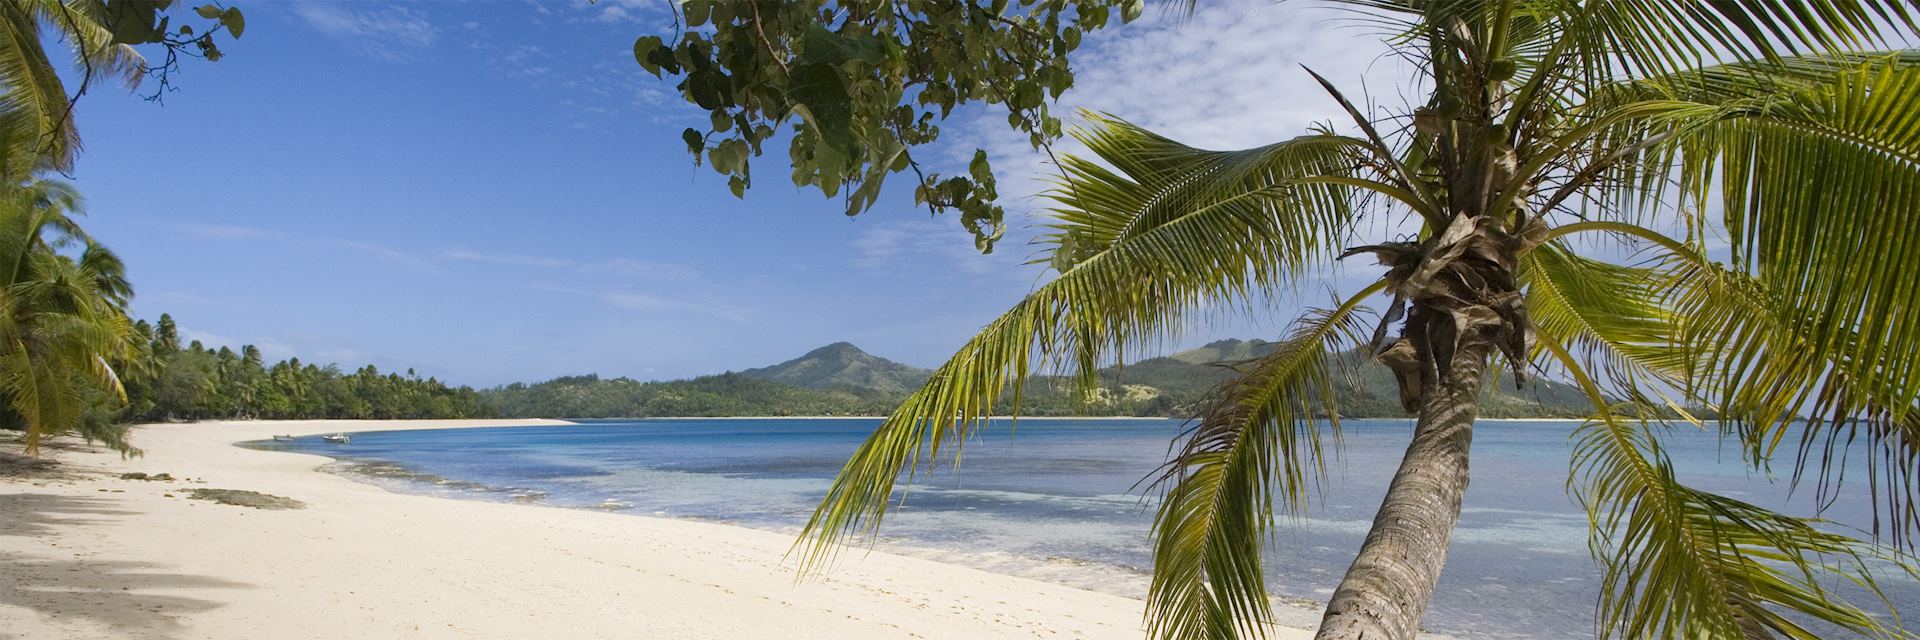 Deserted beach on Fiji